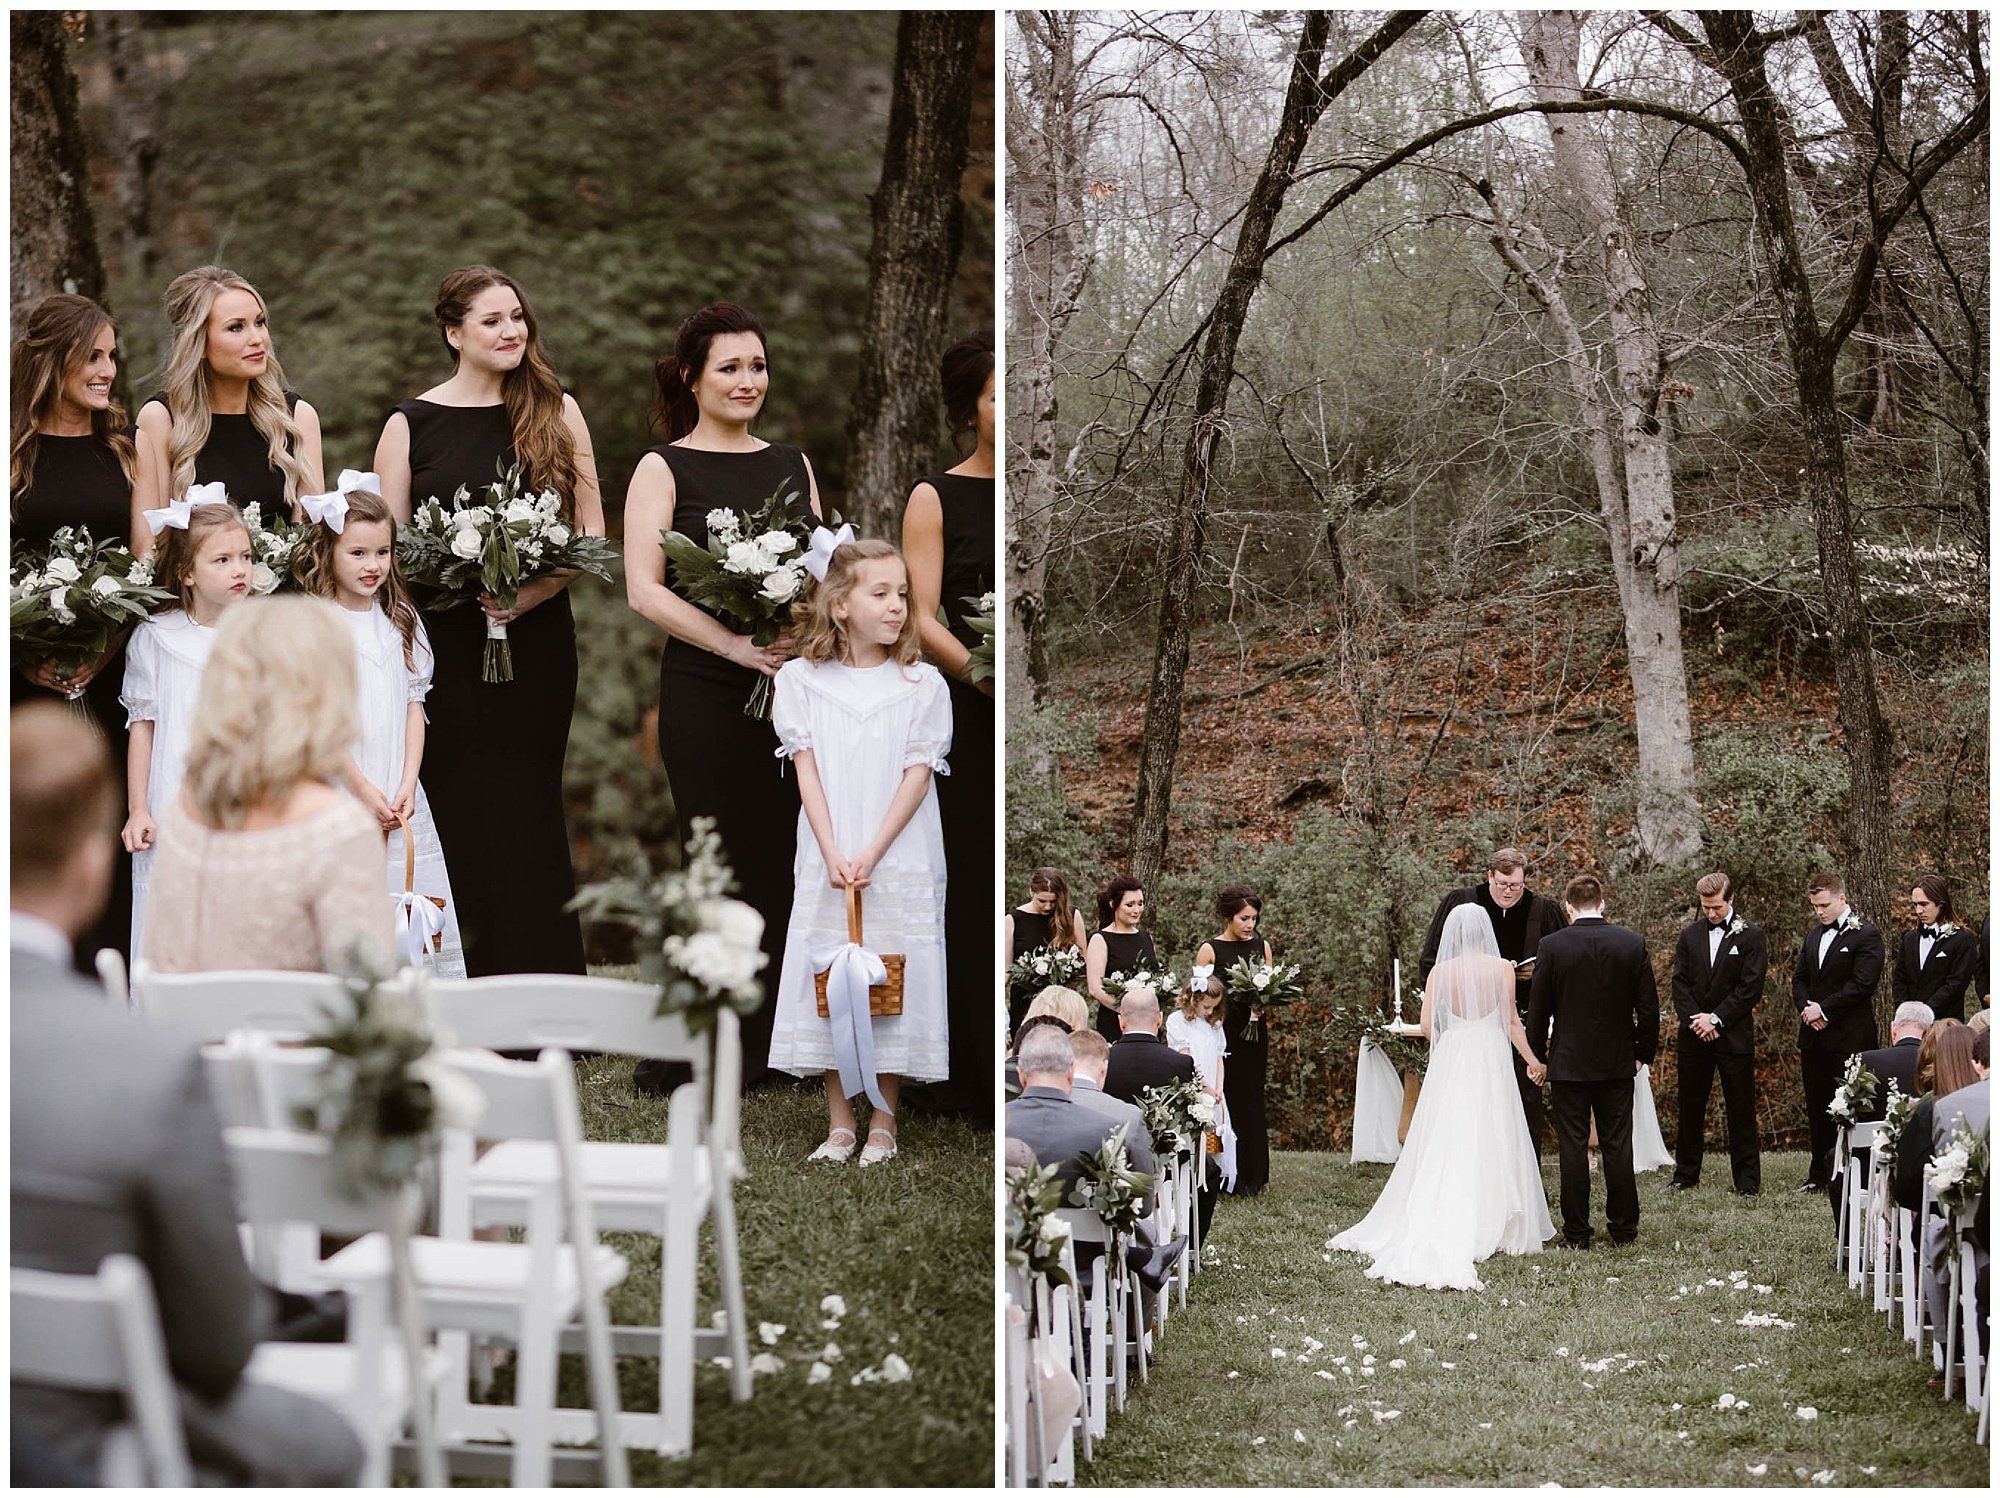 Wedding ceremony photos at Dara's Garden Wedding